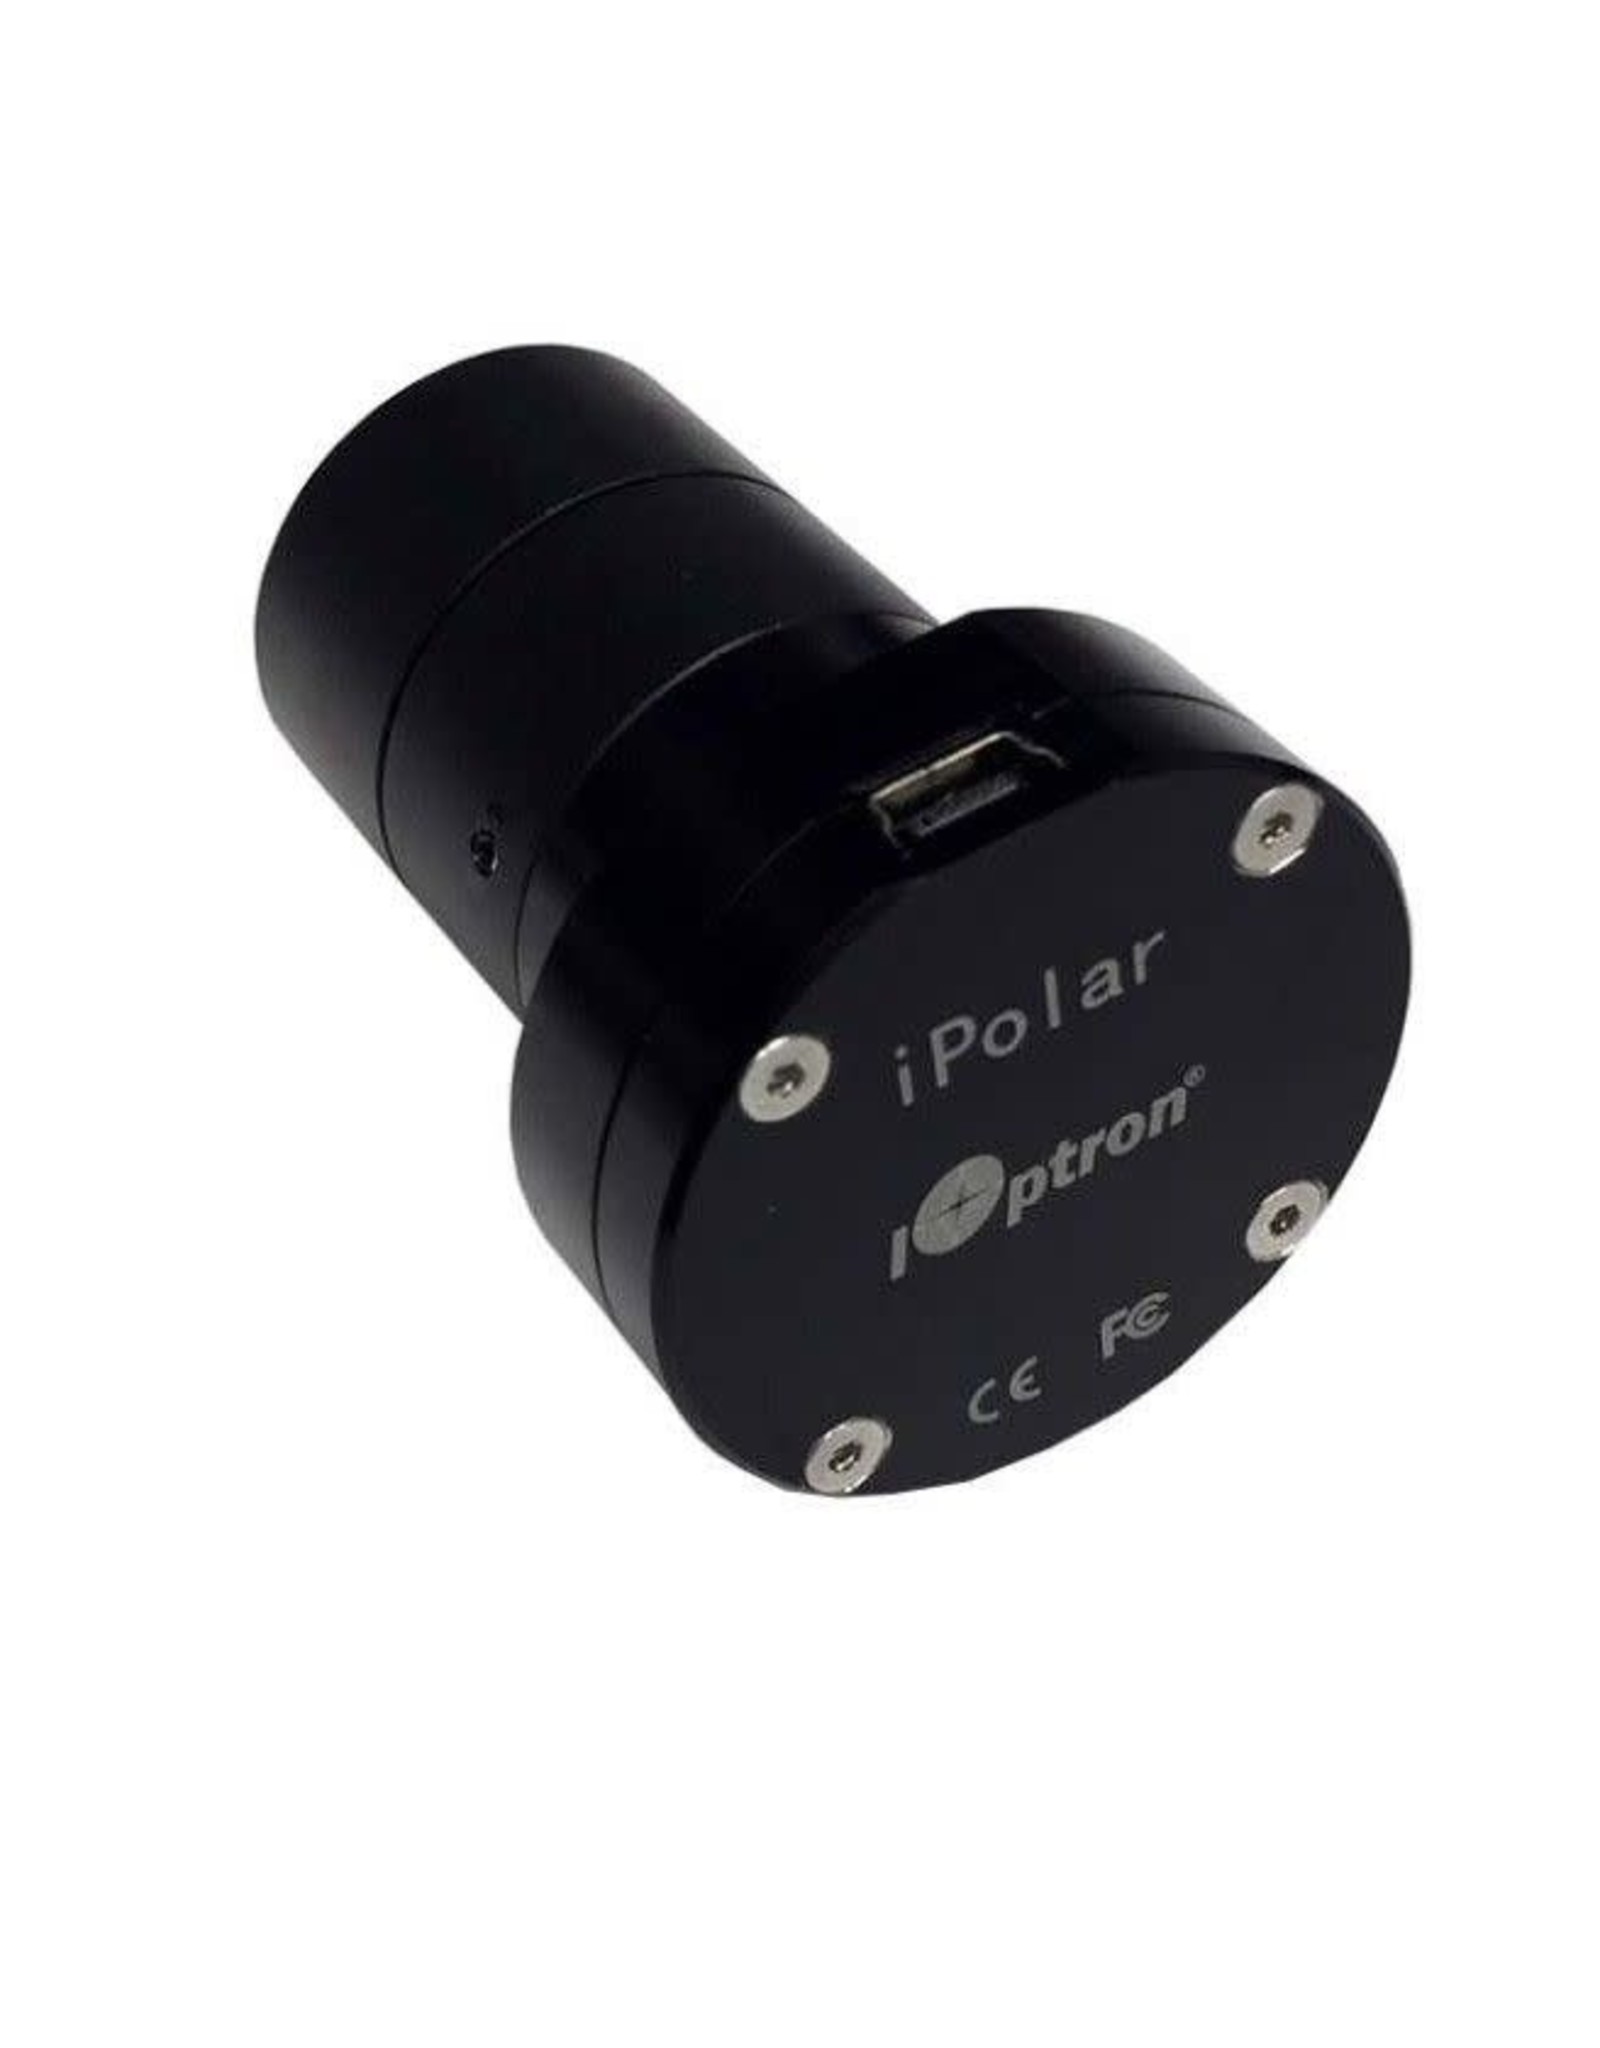 iOptron iOptron iPolarTM Electronics Polarscope with Adapter for External Mounting to AVX/CG5 (#3339-AVXX) External